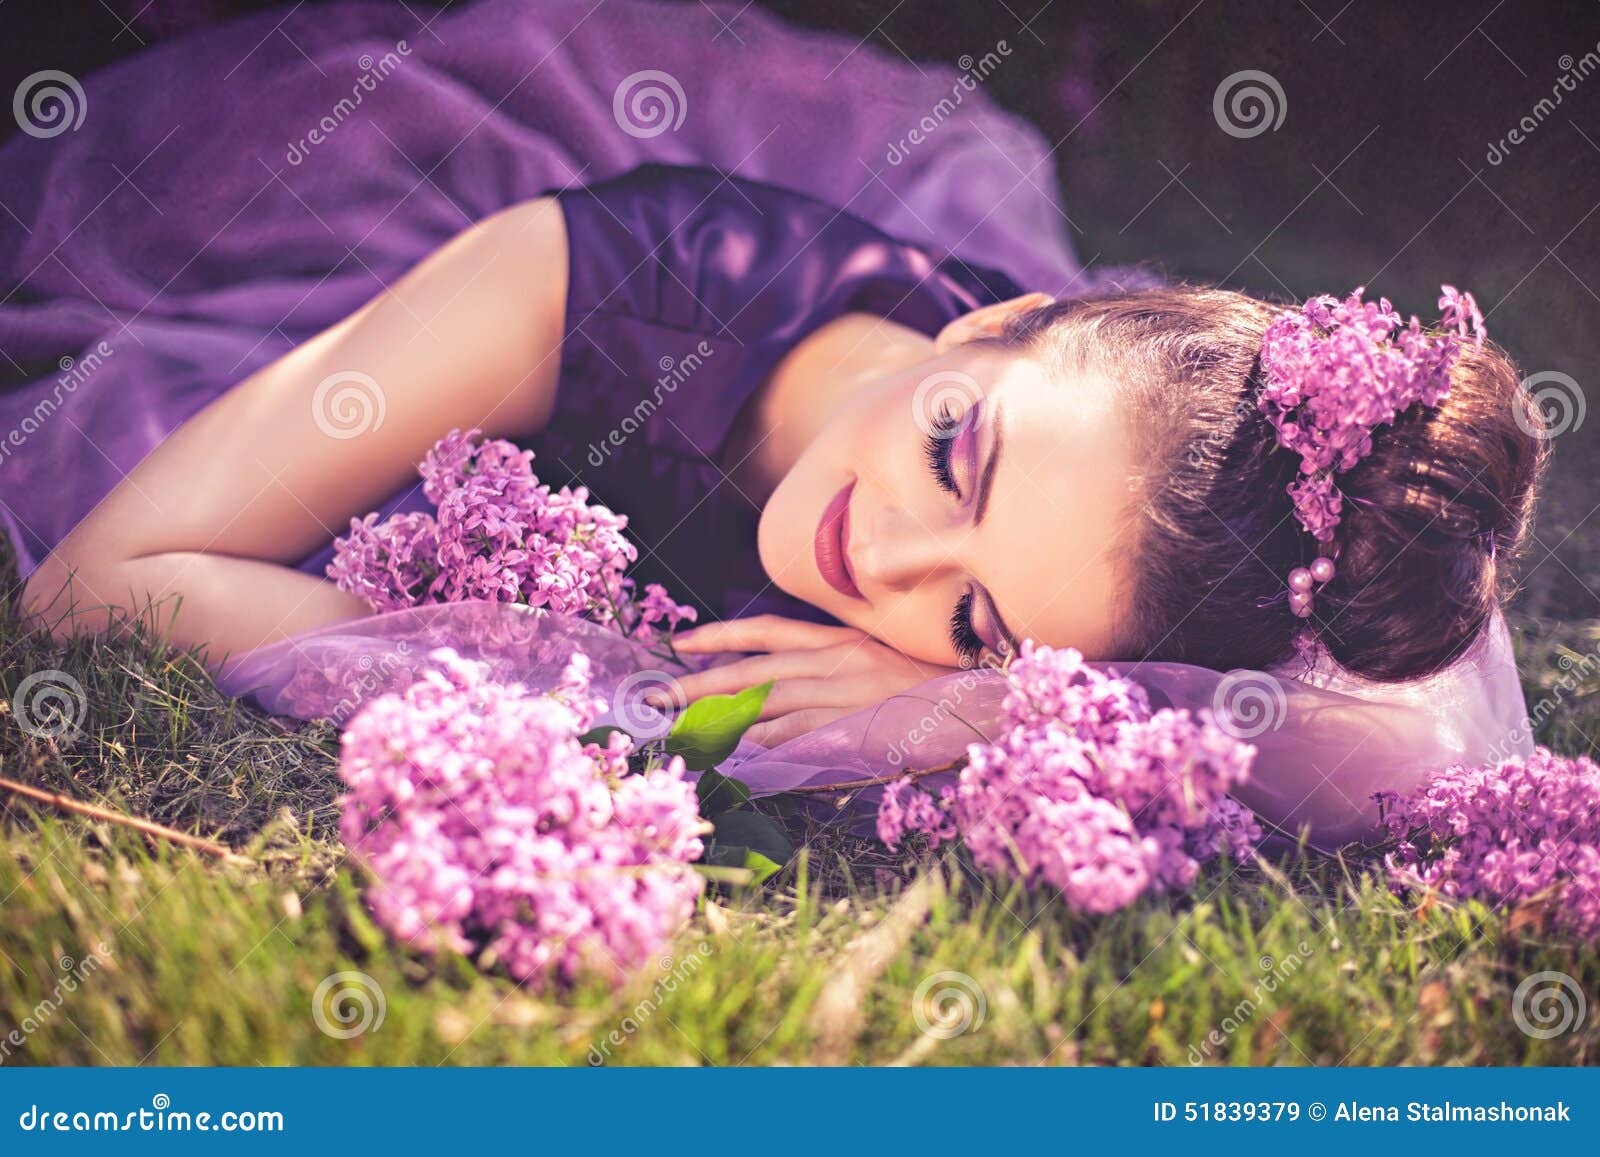 Beautiful Girl Lying In Flowers Stock Image - Image of 